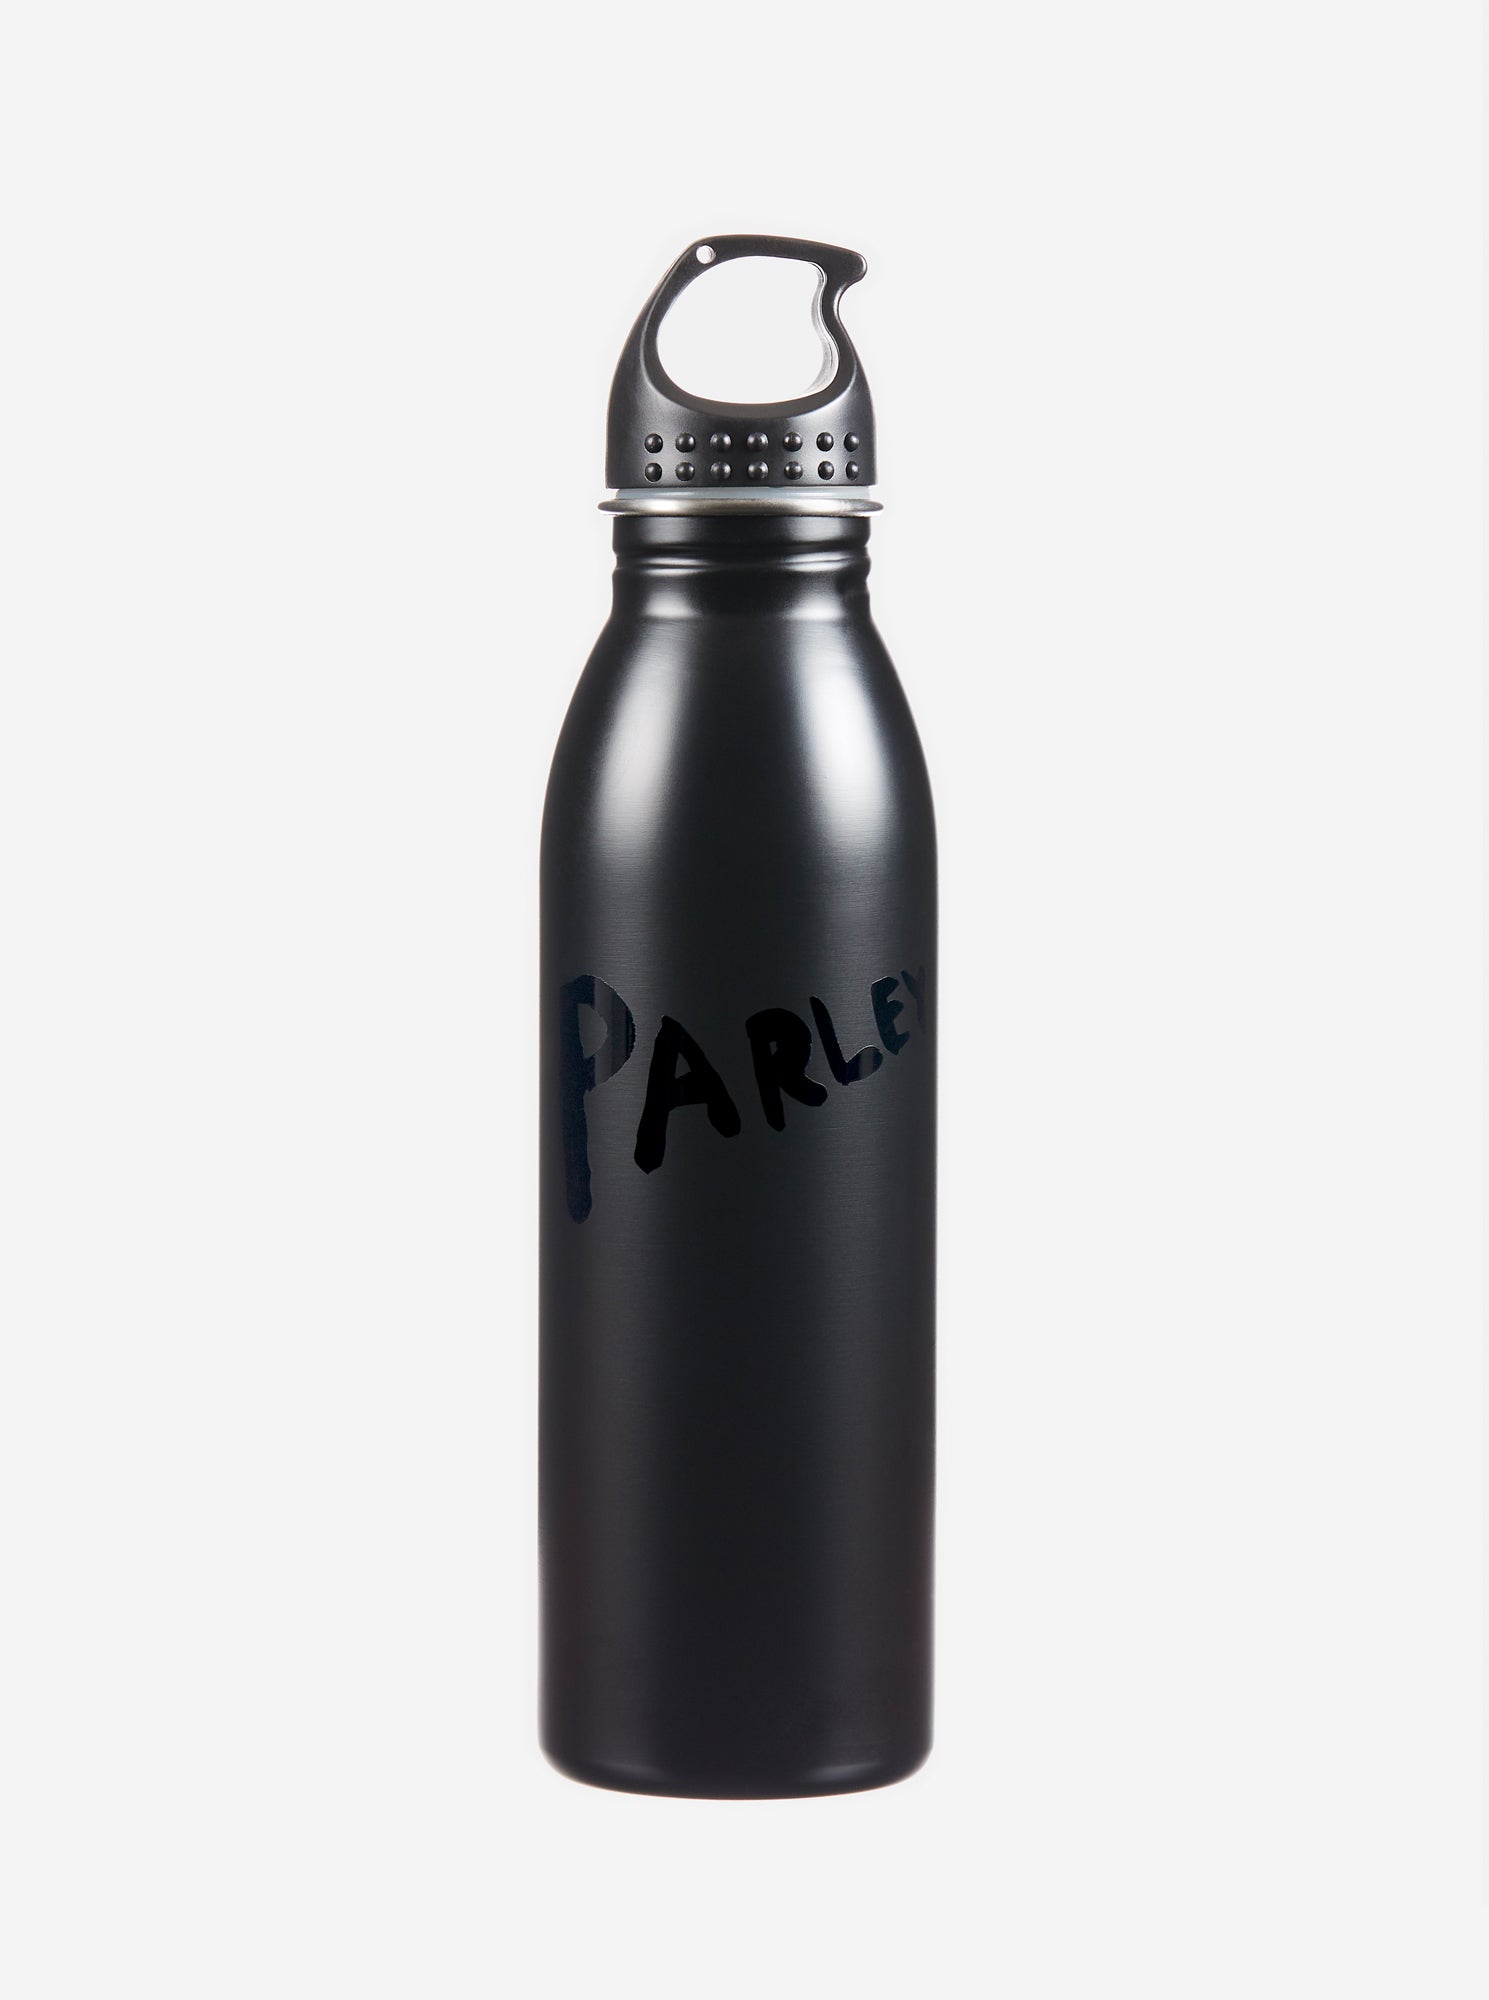 New Adidas Water Bottle